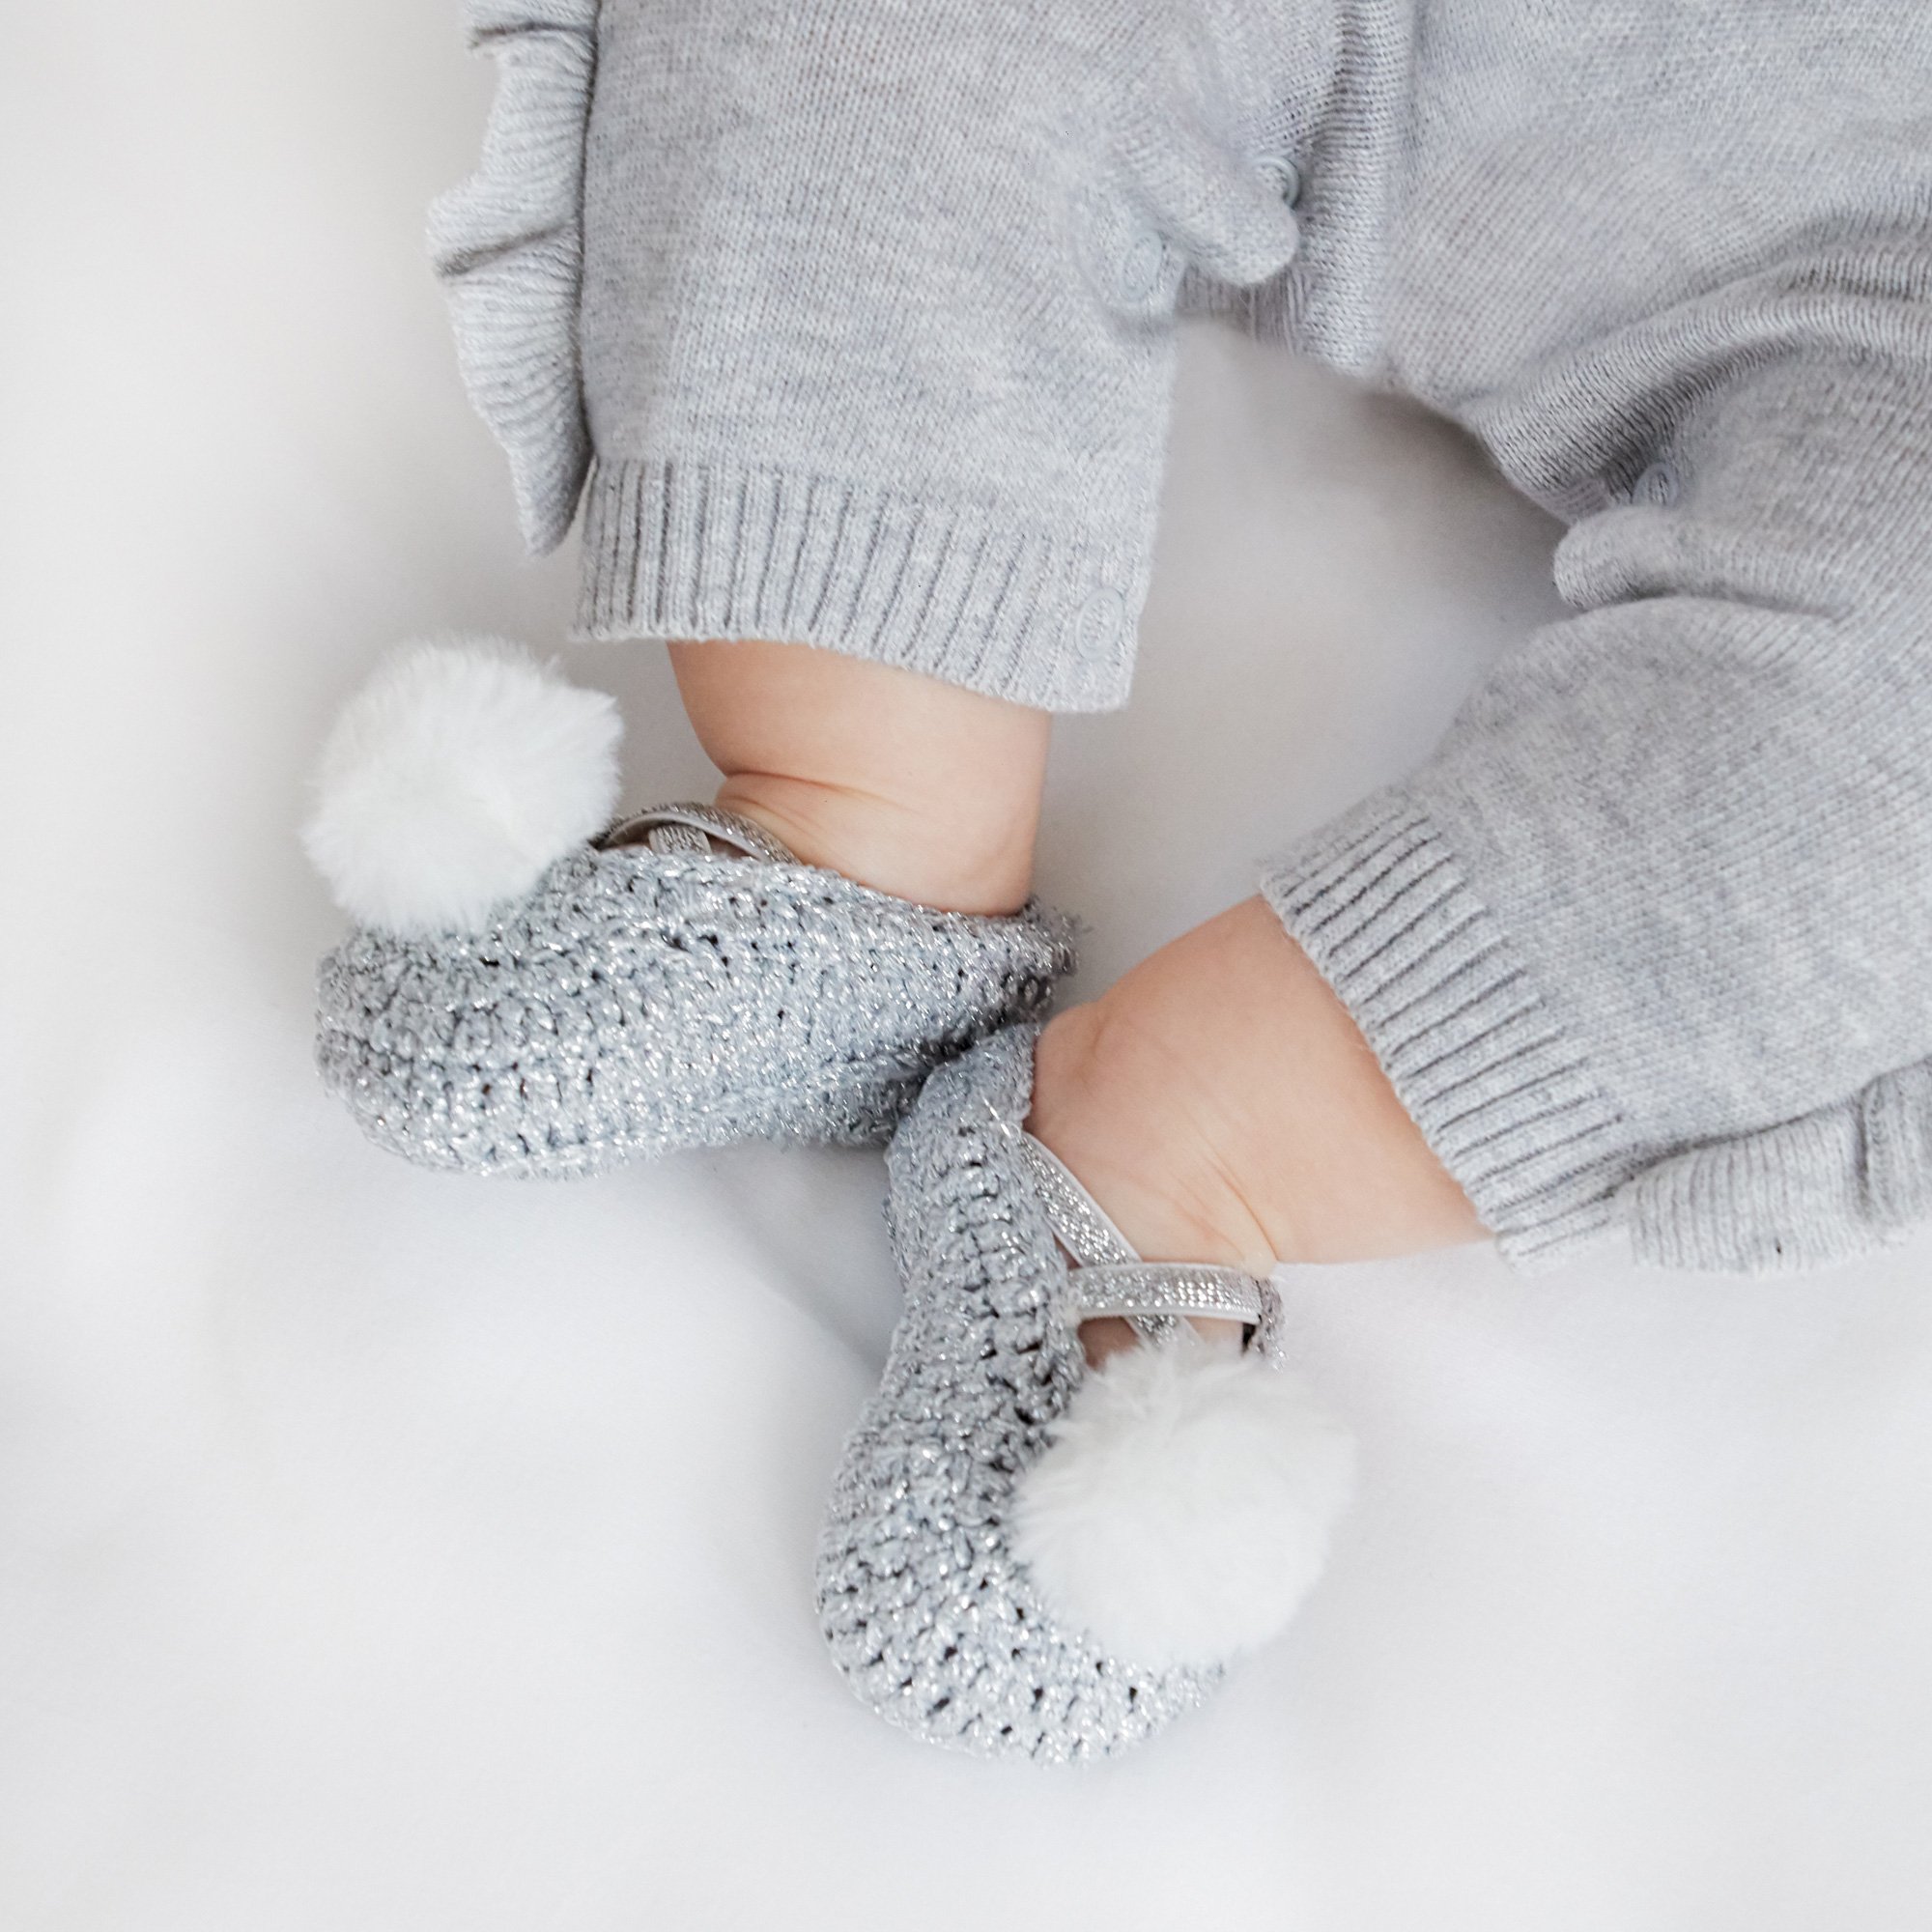 baby girl crochet shoes